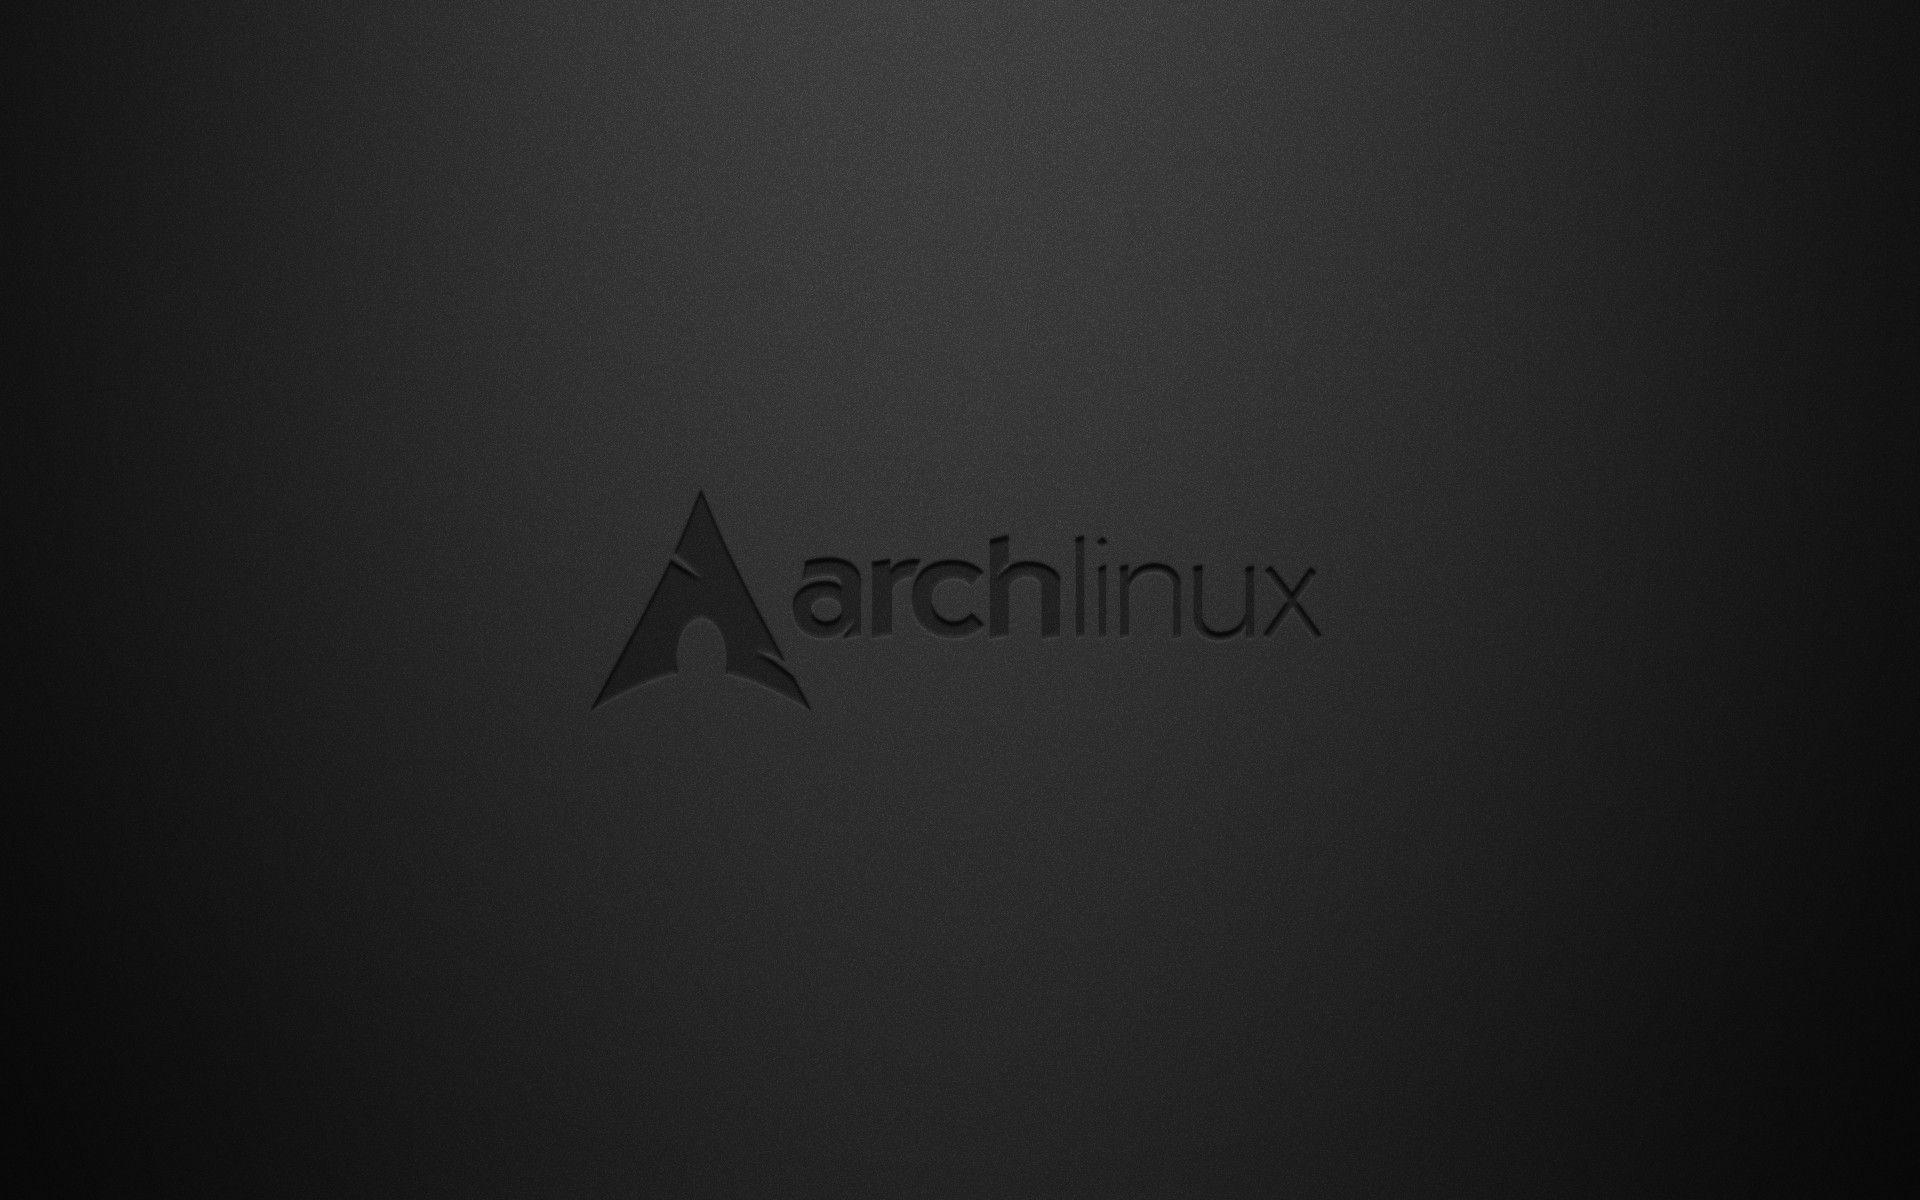 Noisy Arch Linux